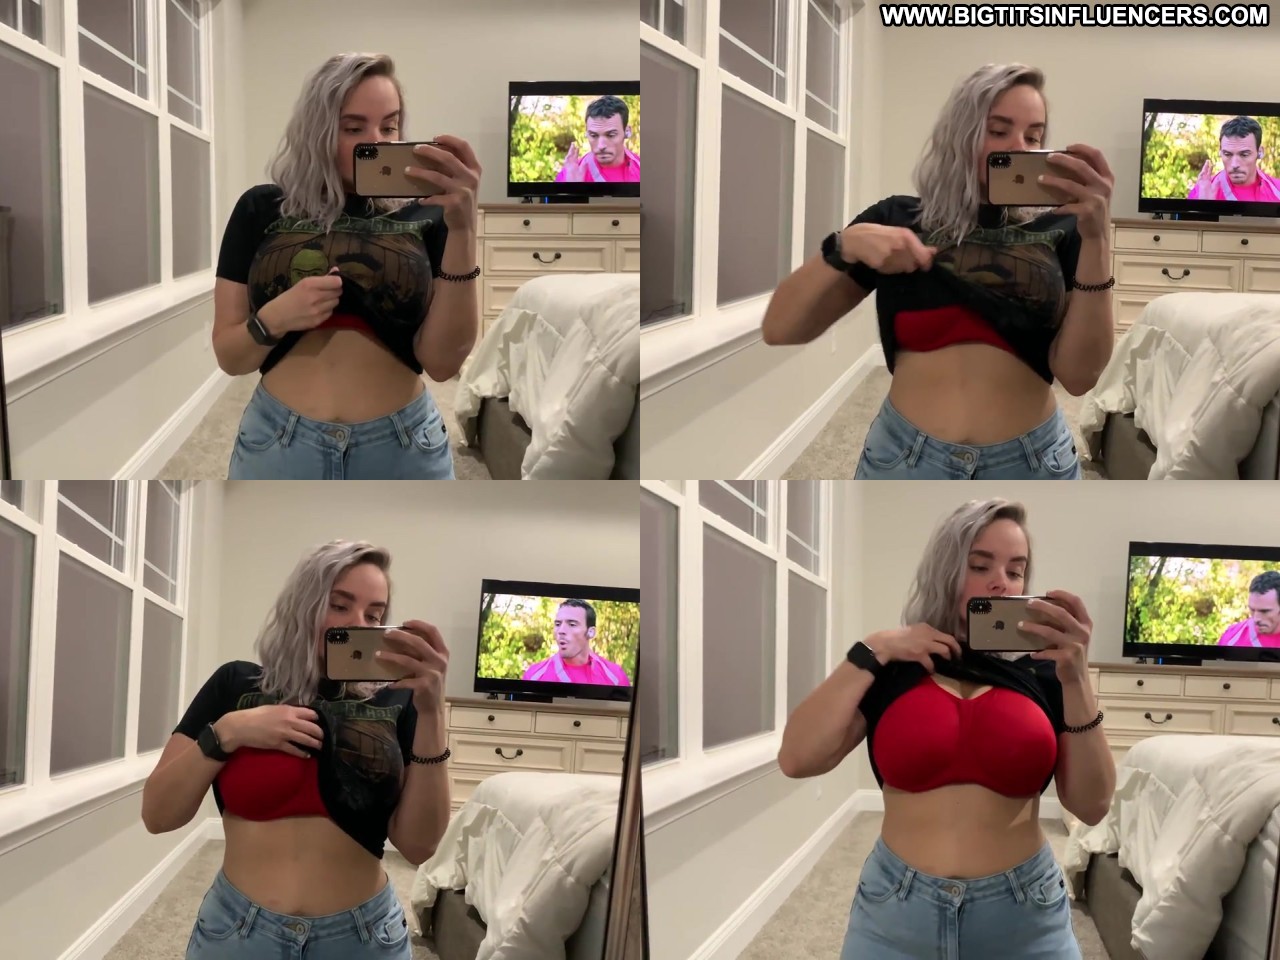 Erica fett nude big tits tease video leaked